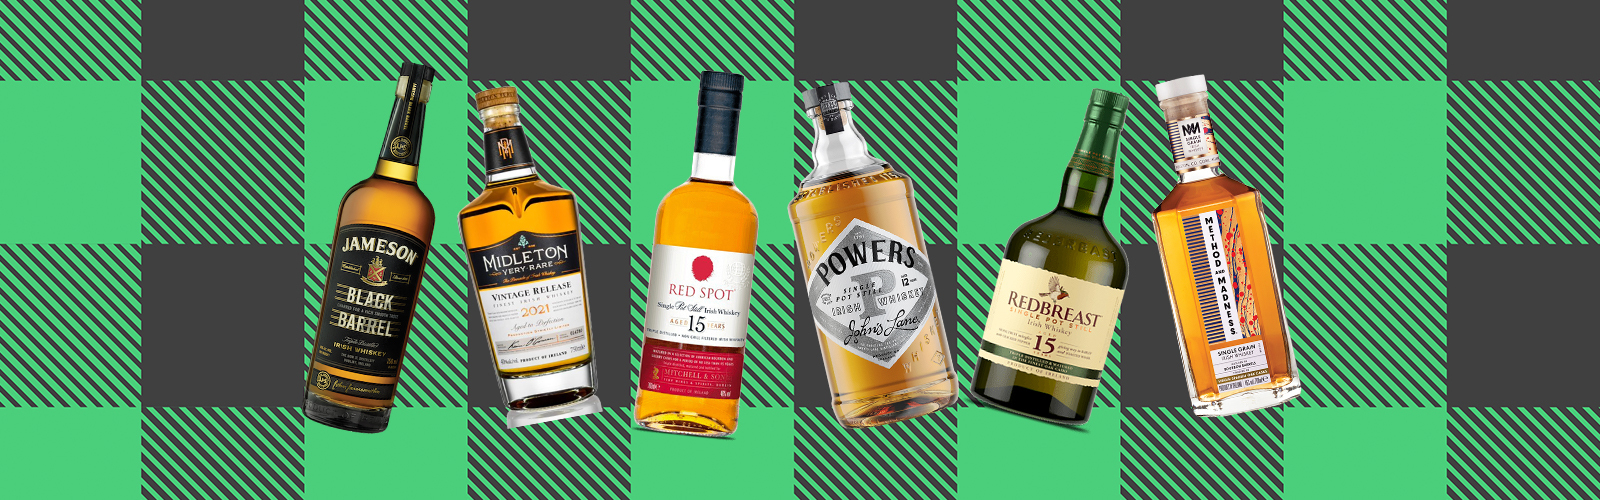 Best Jameson Irish Whiskey Family Brands Ranked